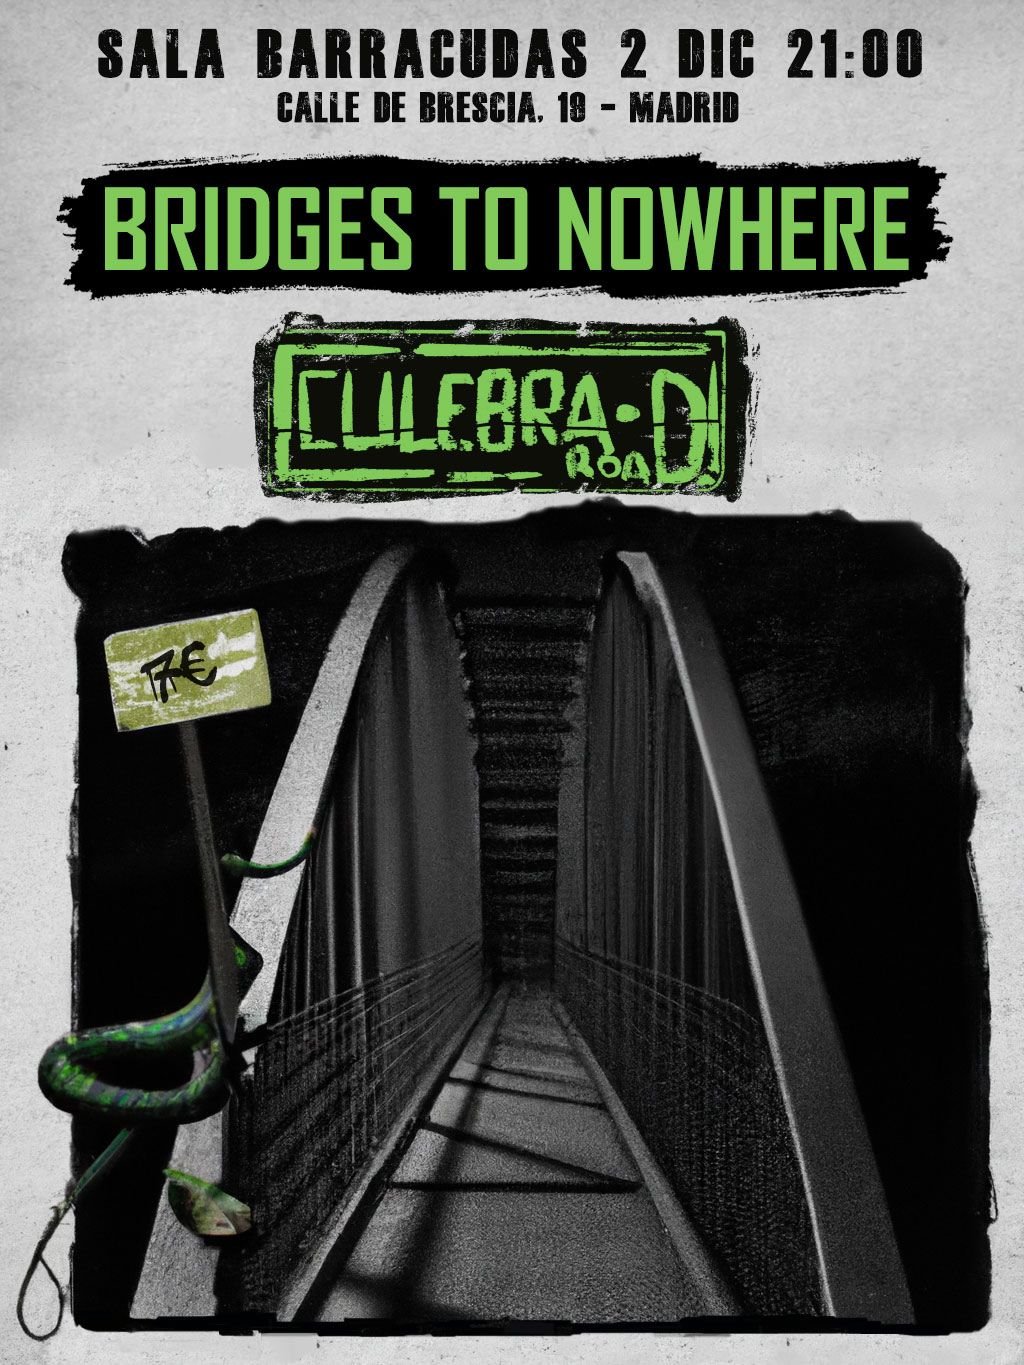 Bridges To Nowhere - Bridges To Nowhere - Science Or Belief (2022) Rock alternativo desde Talavera de la Reina - Página 2 19566557daf99d72c1bce337fdeb086b